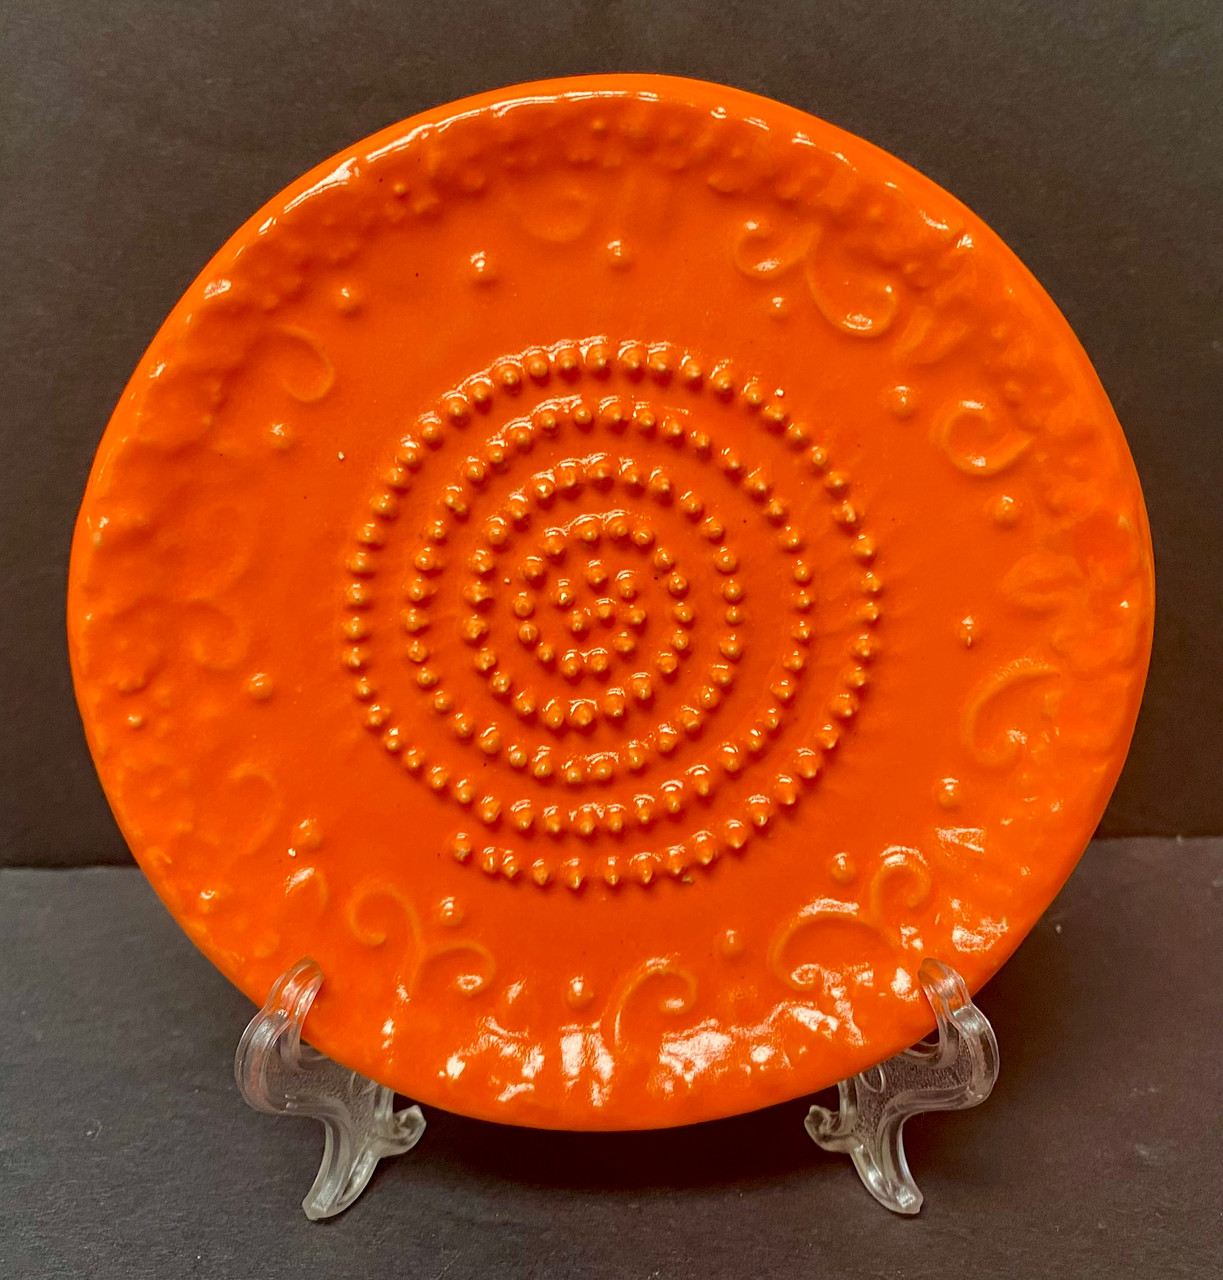 Ceramic Garlic Grater Set  Includes Plate Grater, Peeler and Brush